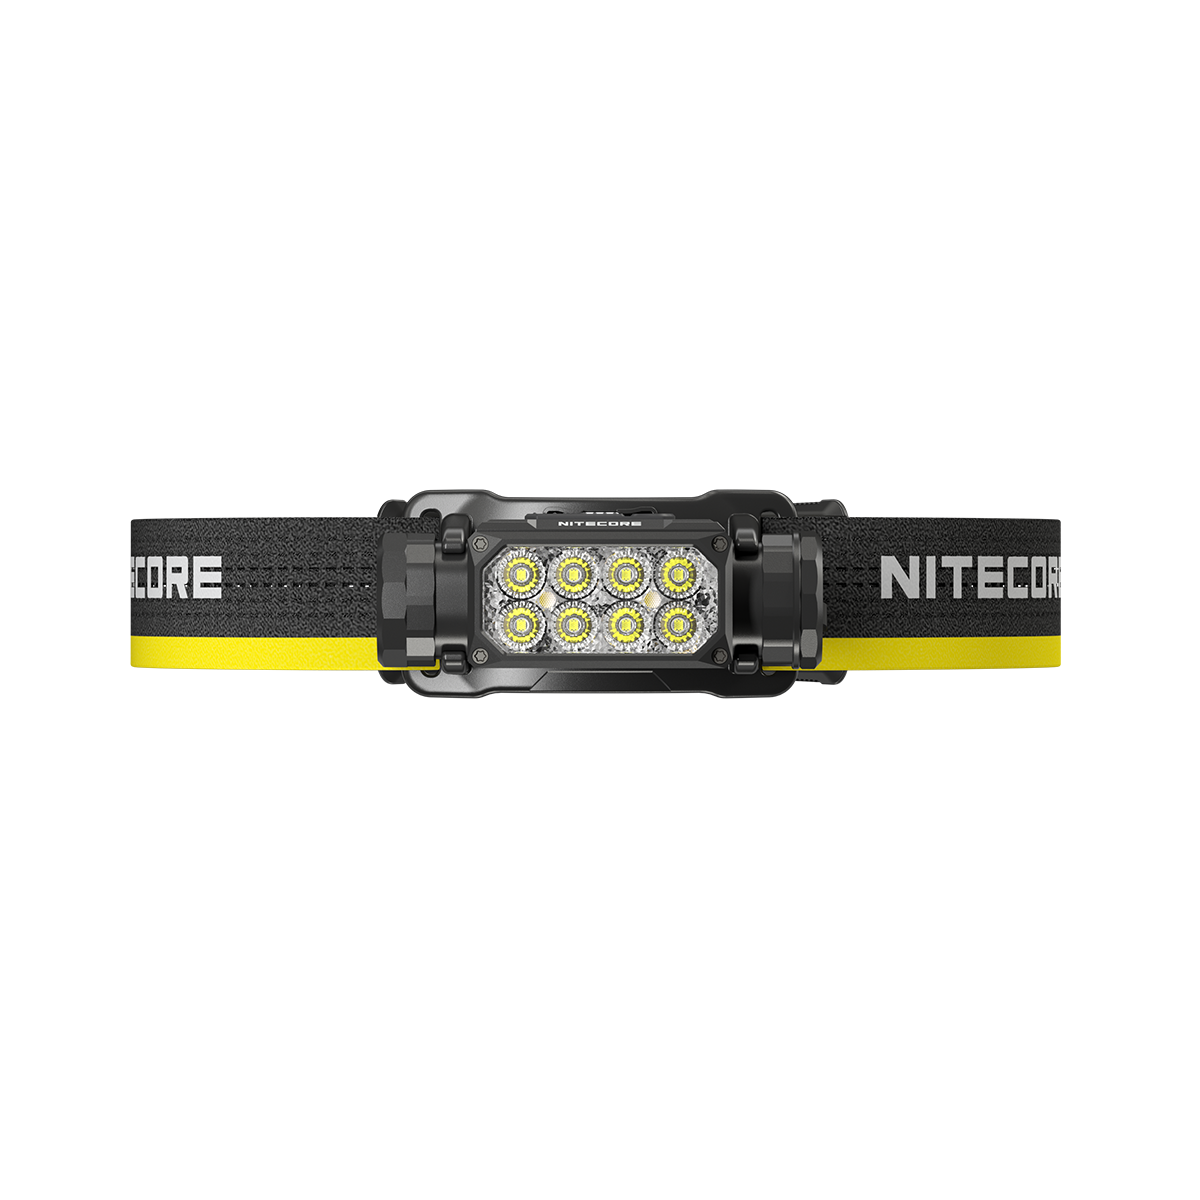 Nitecore HC65 UNE - Cam2